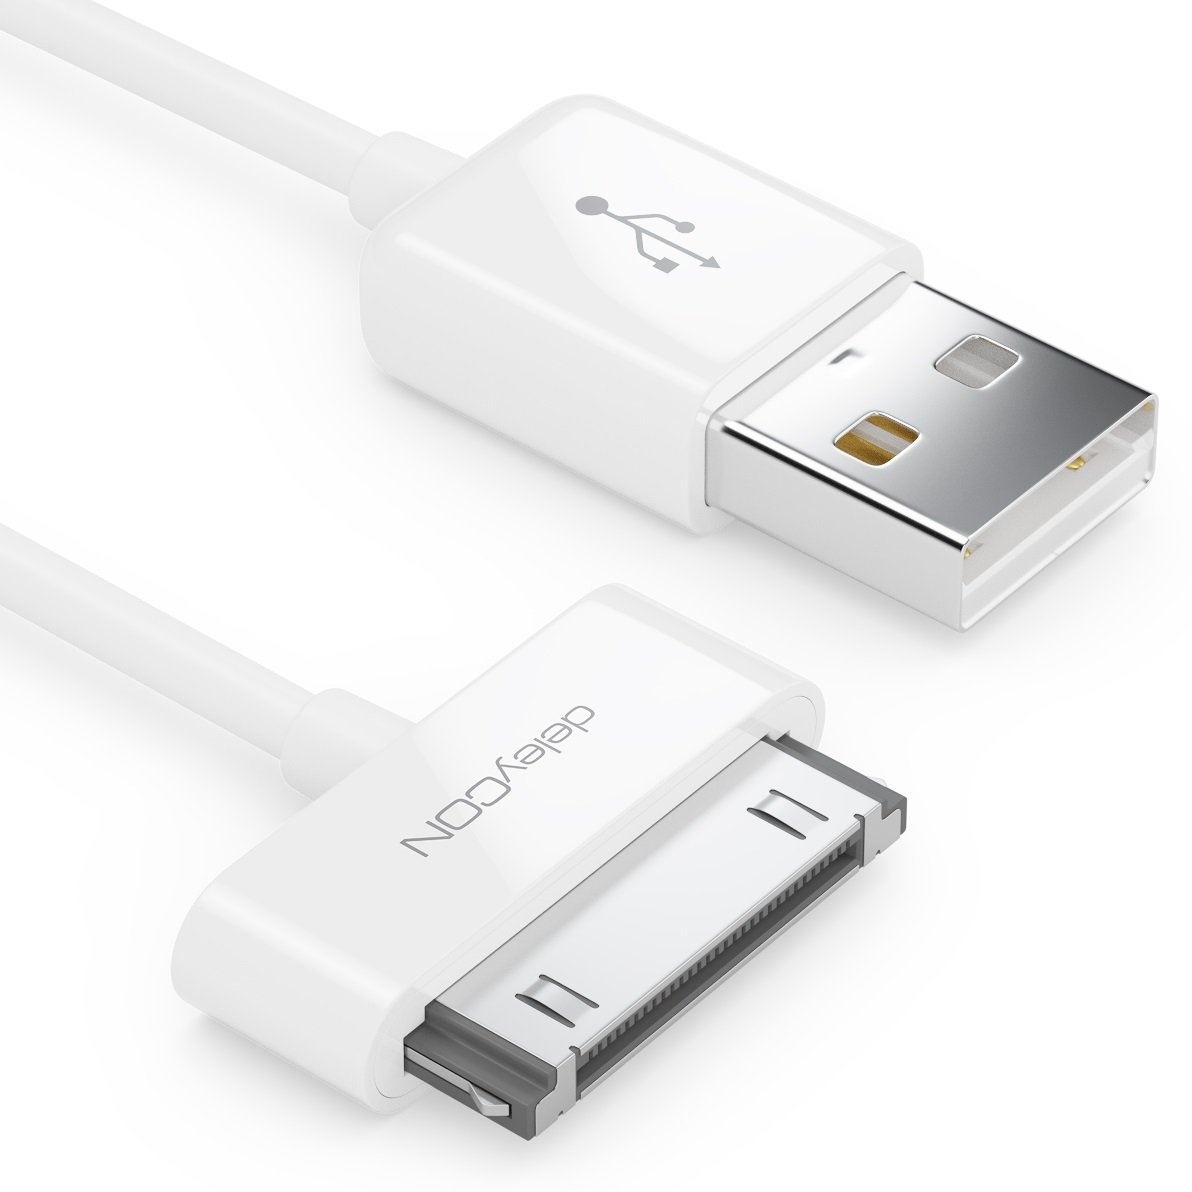 deleyCON 1m 30-Pin USB Kabel Dock Connector Sync-Kabel Ladekabel Datenkabel Kompatibel mit iPhone 4s 4 3Gs 3G iPad iPod - Weiß